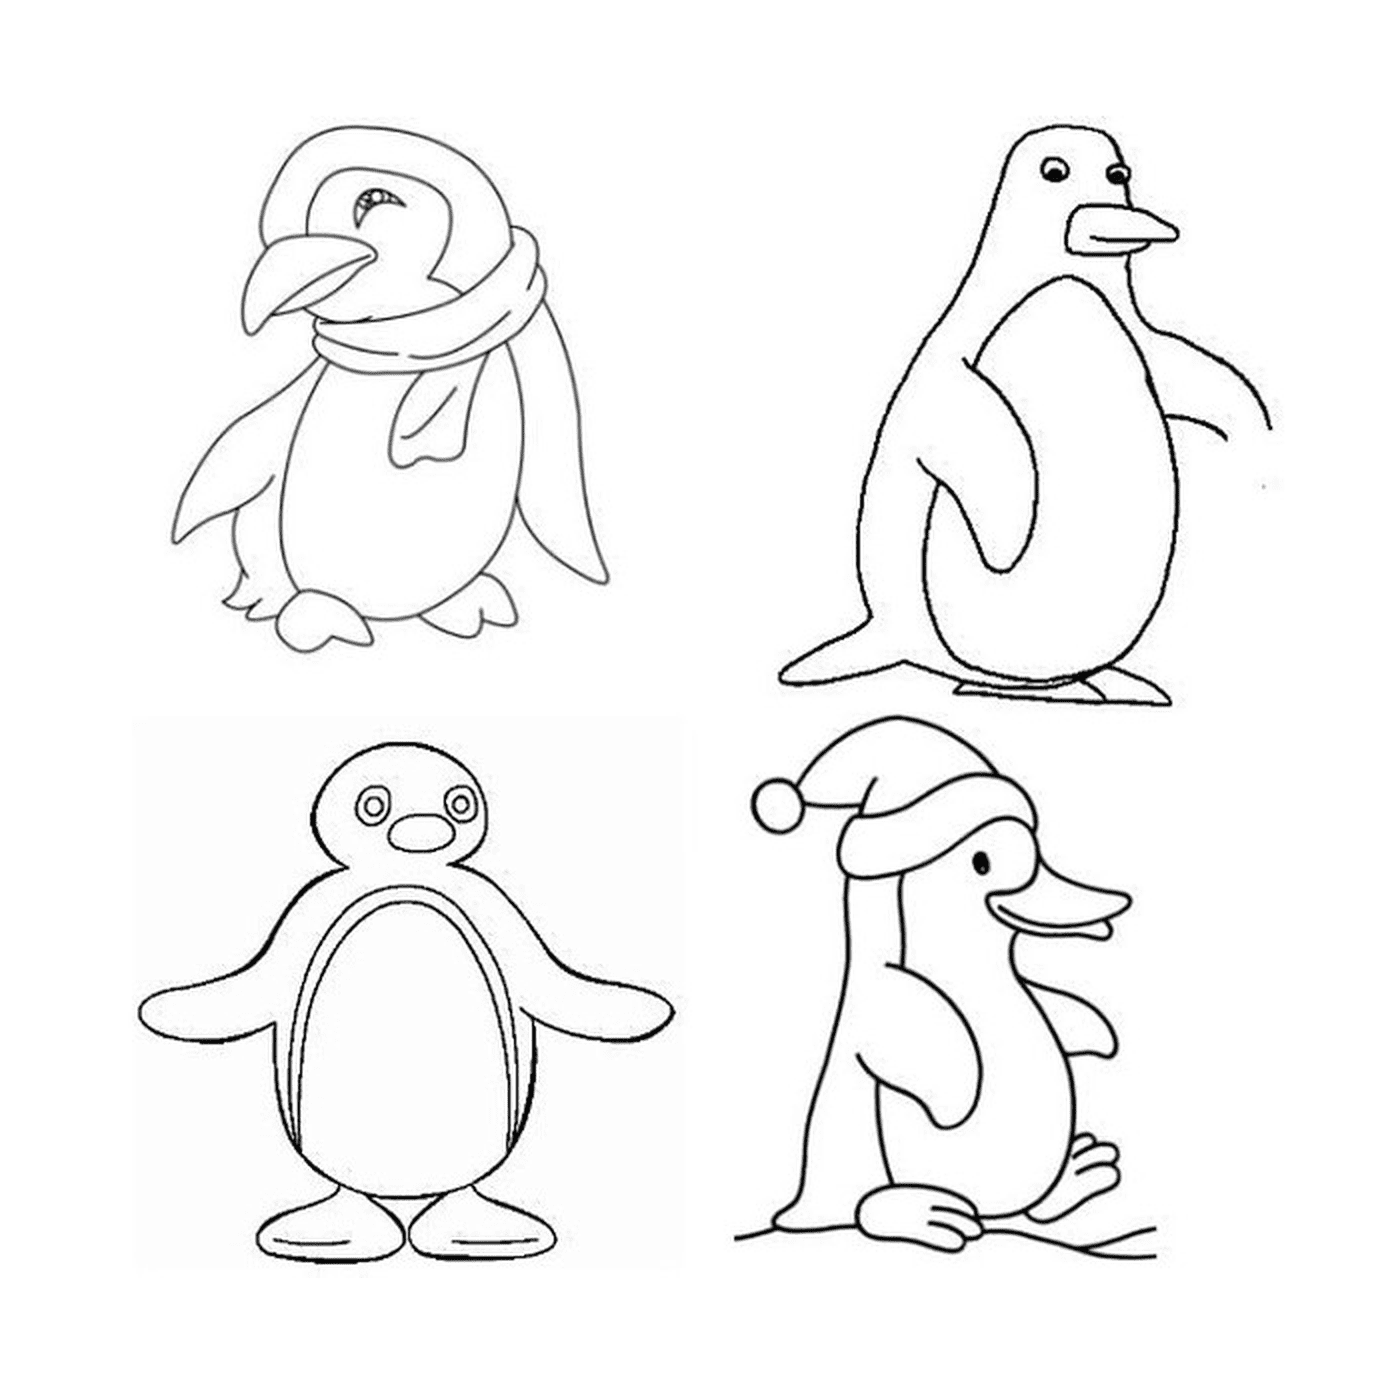  Quattro pinguini diversi nel disegno 